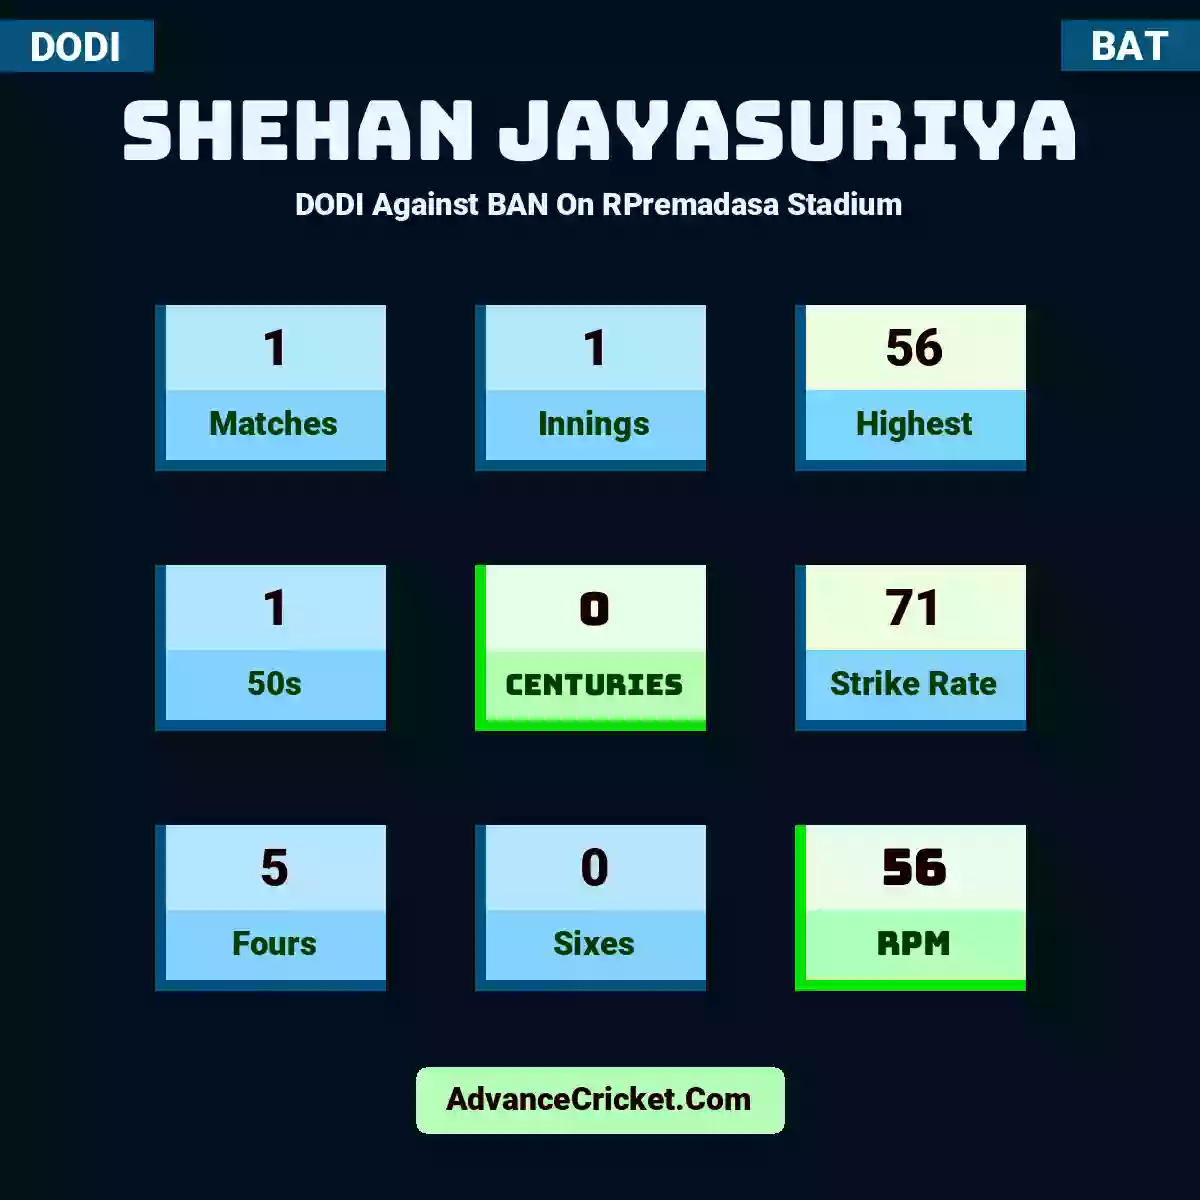 Shehan Jayasuriya DODI  Against BAN On RPremadasa Stadium, Shehan Jayasuriya played 1 matches, scored 56 runs as highest, 1 half-centuries, and 0 centuries, with a strike rate of 71. S.Jayasuriya hit 5 fours and 0 sixes, with an RPM of 56.